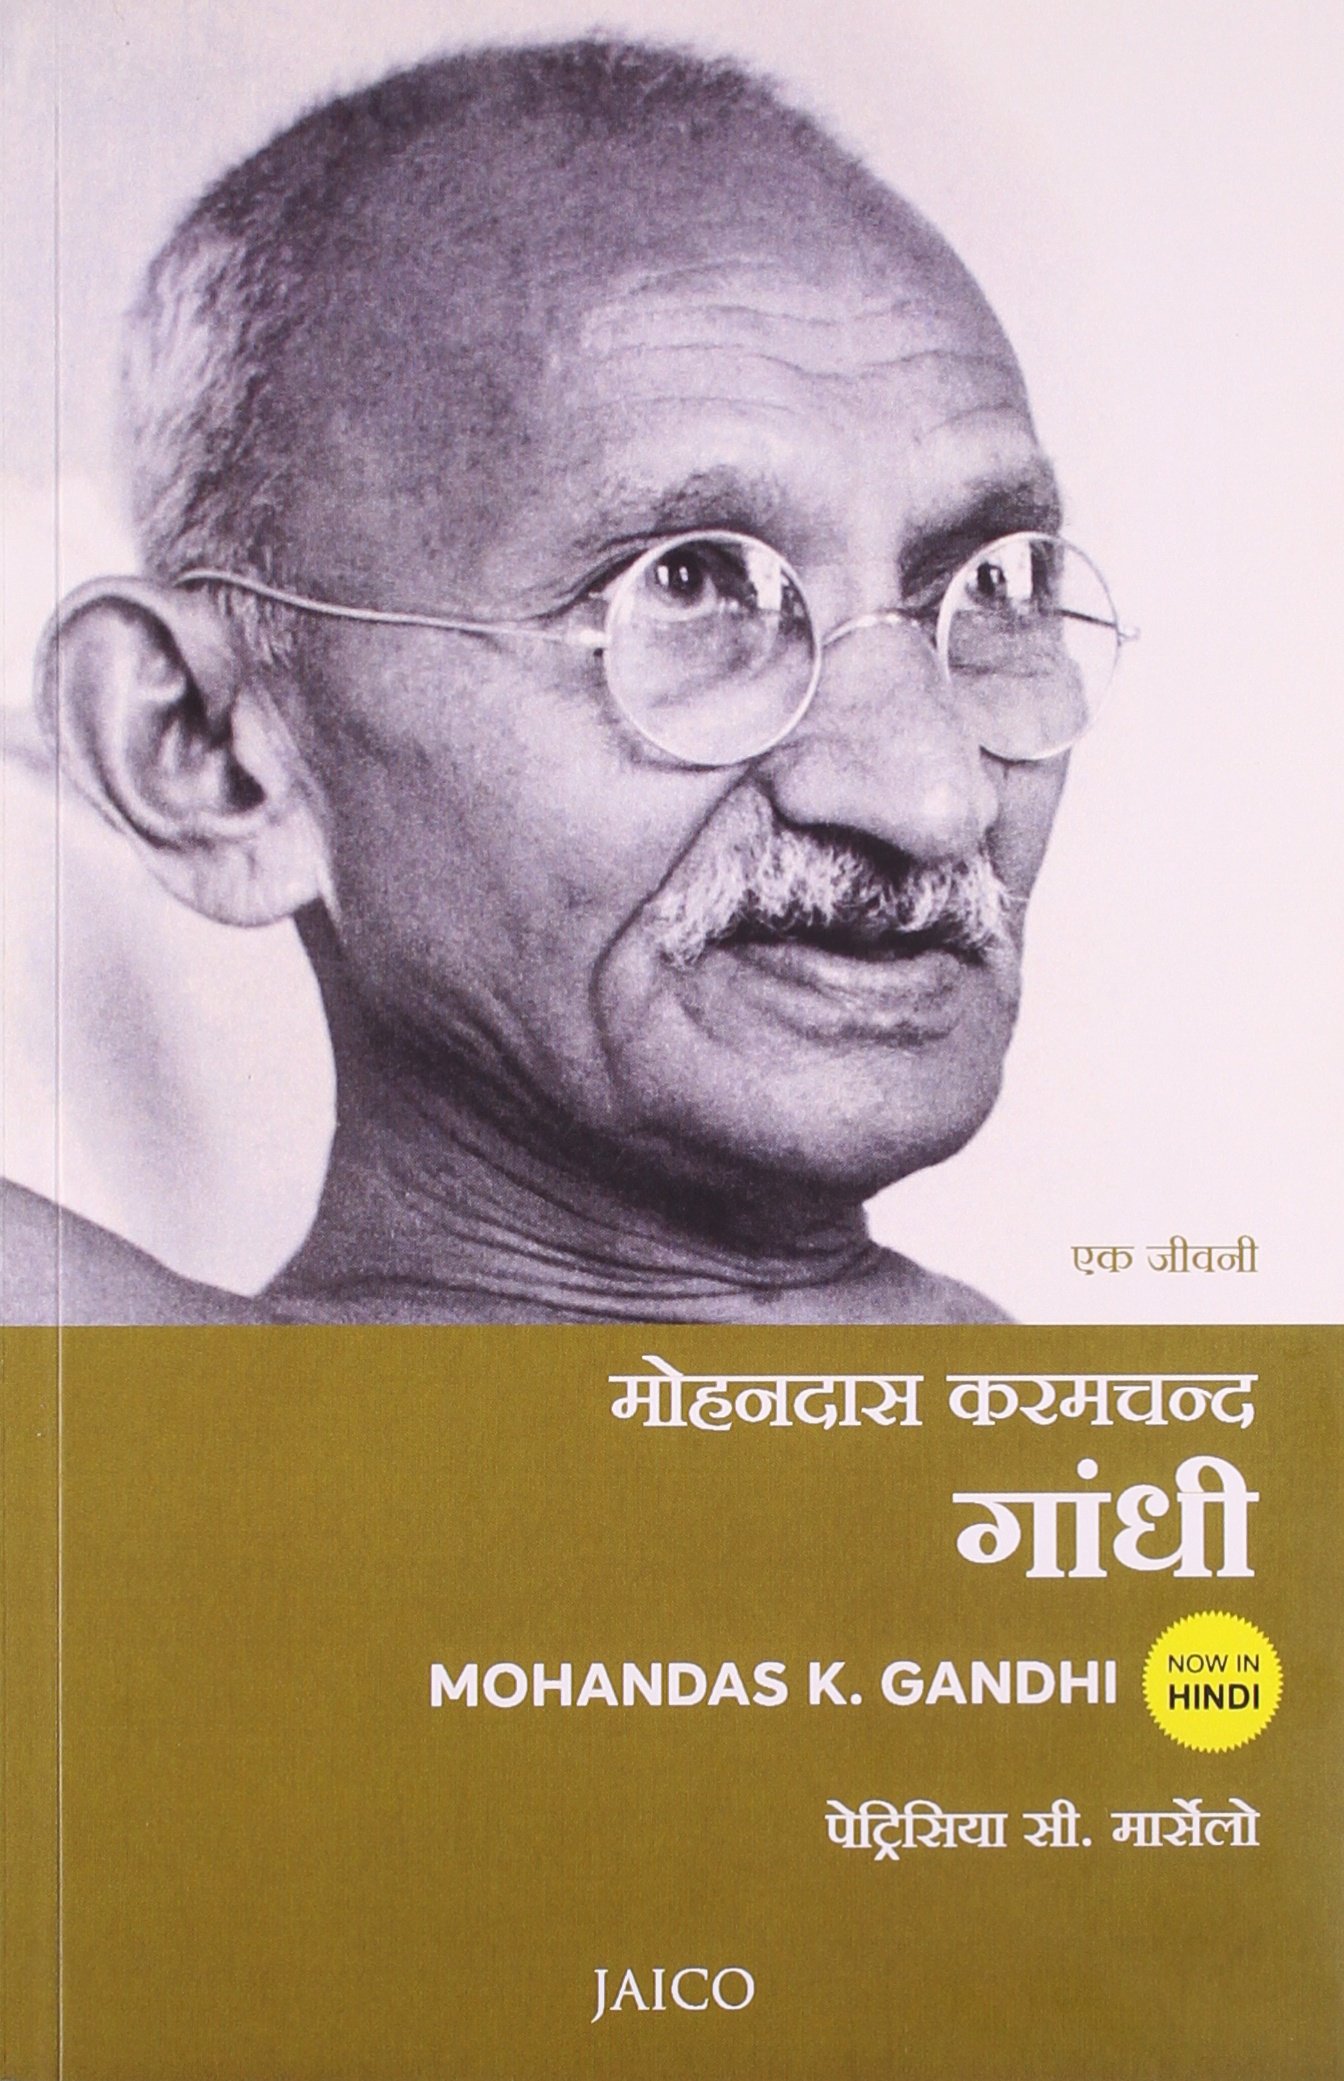 mohandas-k-gandhi-a-biography-hindi